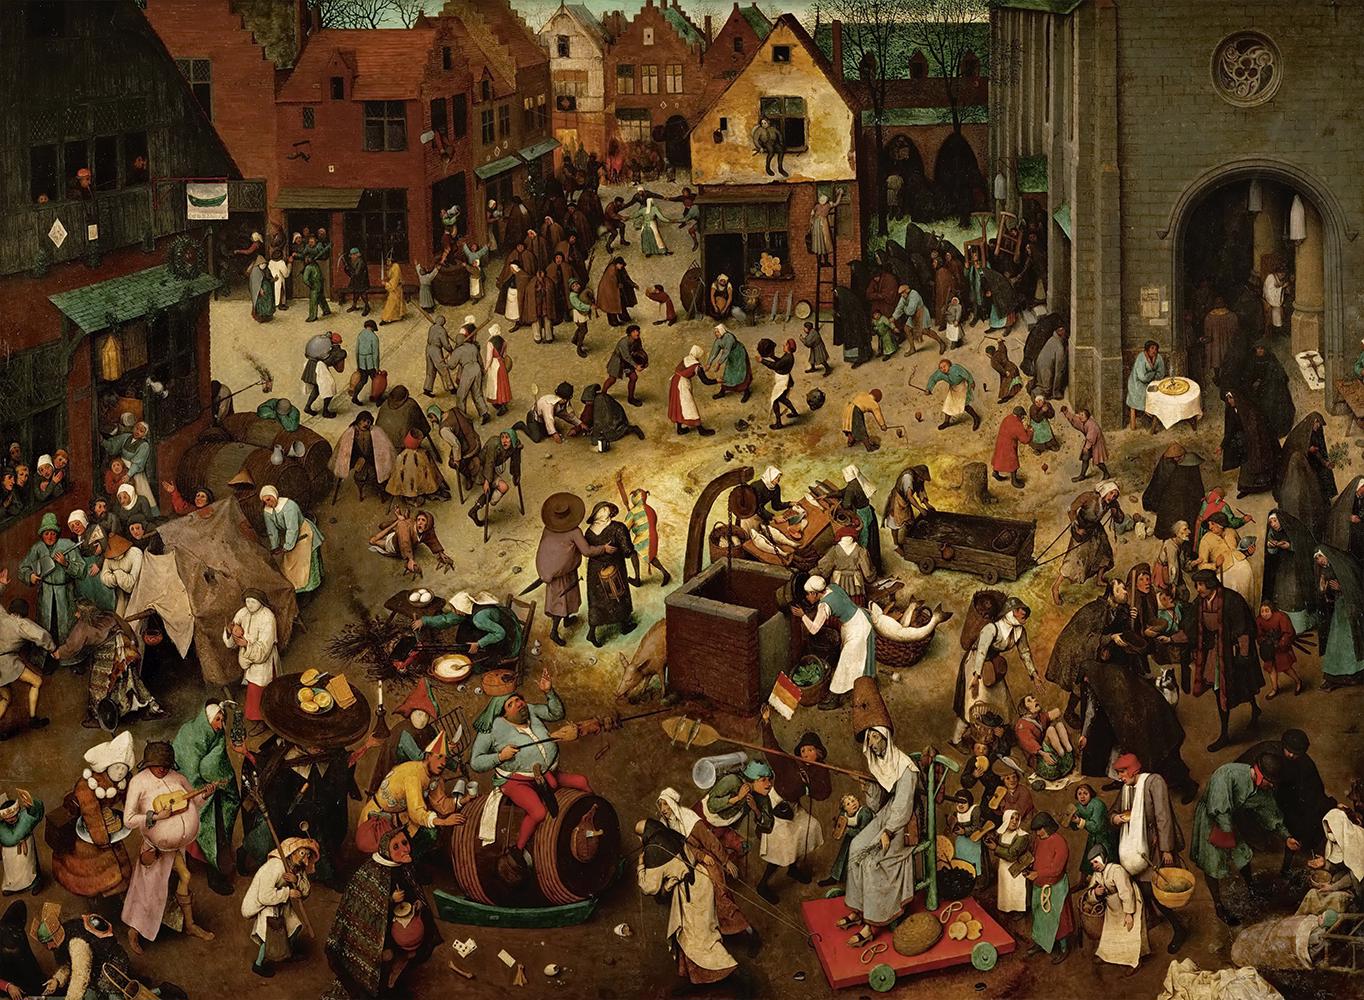 Puzzle Pieter Bruegel: Boj medzi karnevalom a pôstom